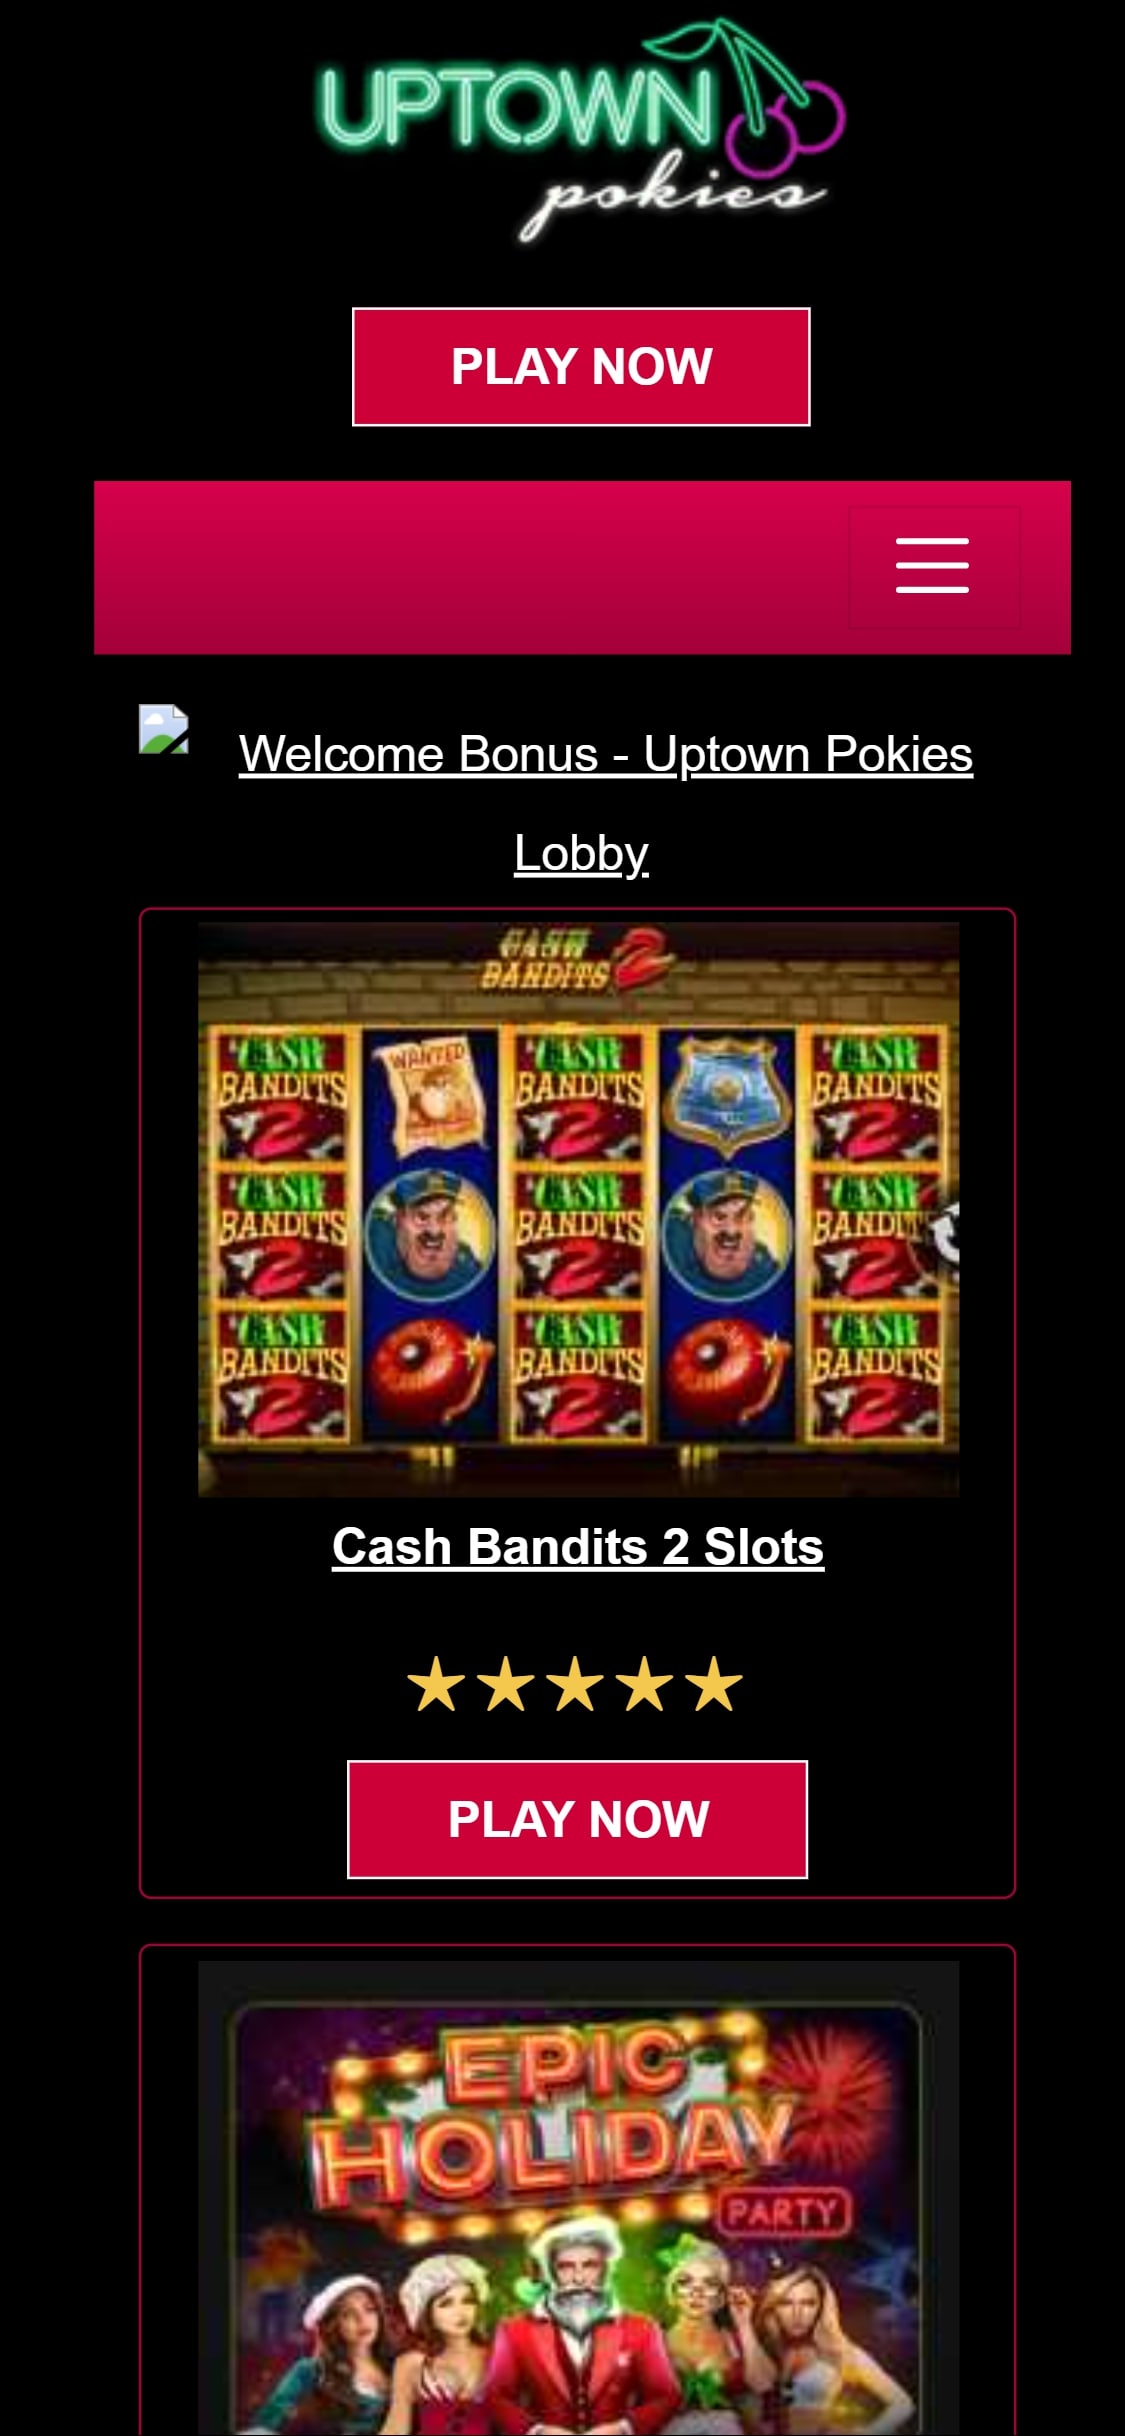 Uptown Pokies Casino Mobile Review